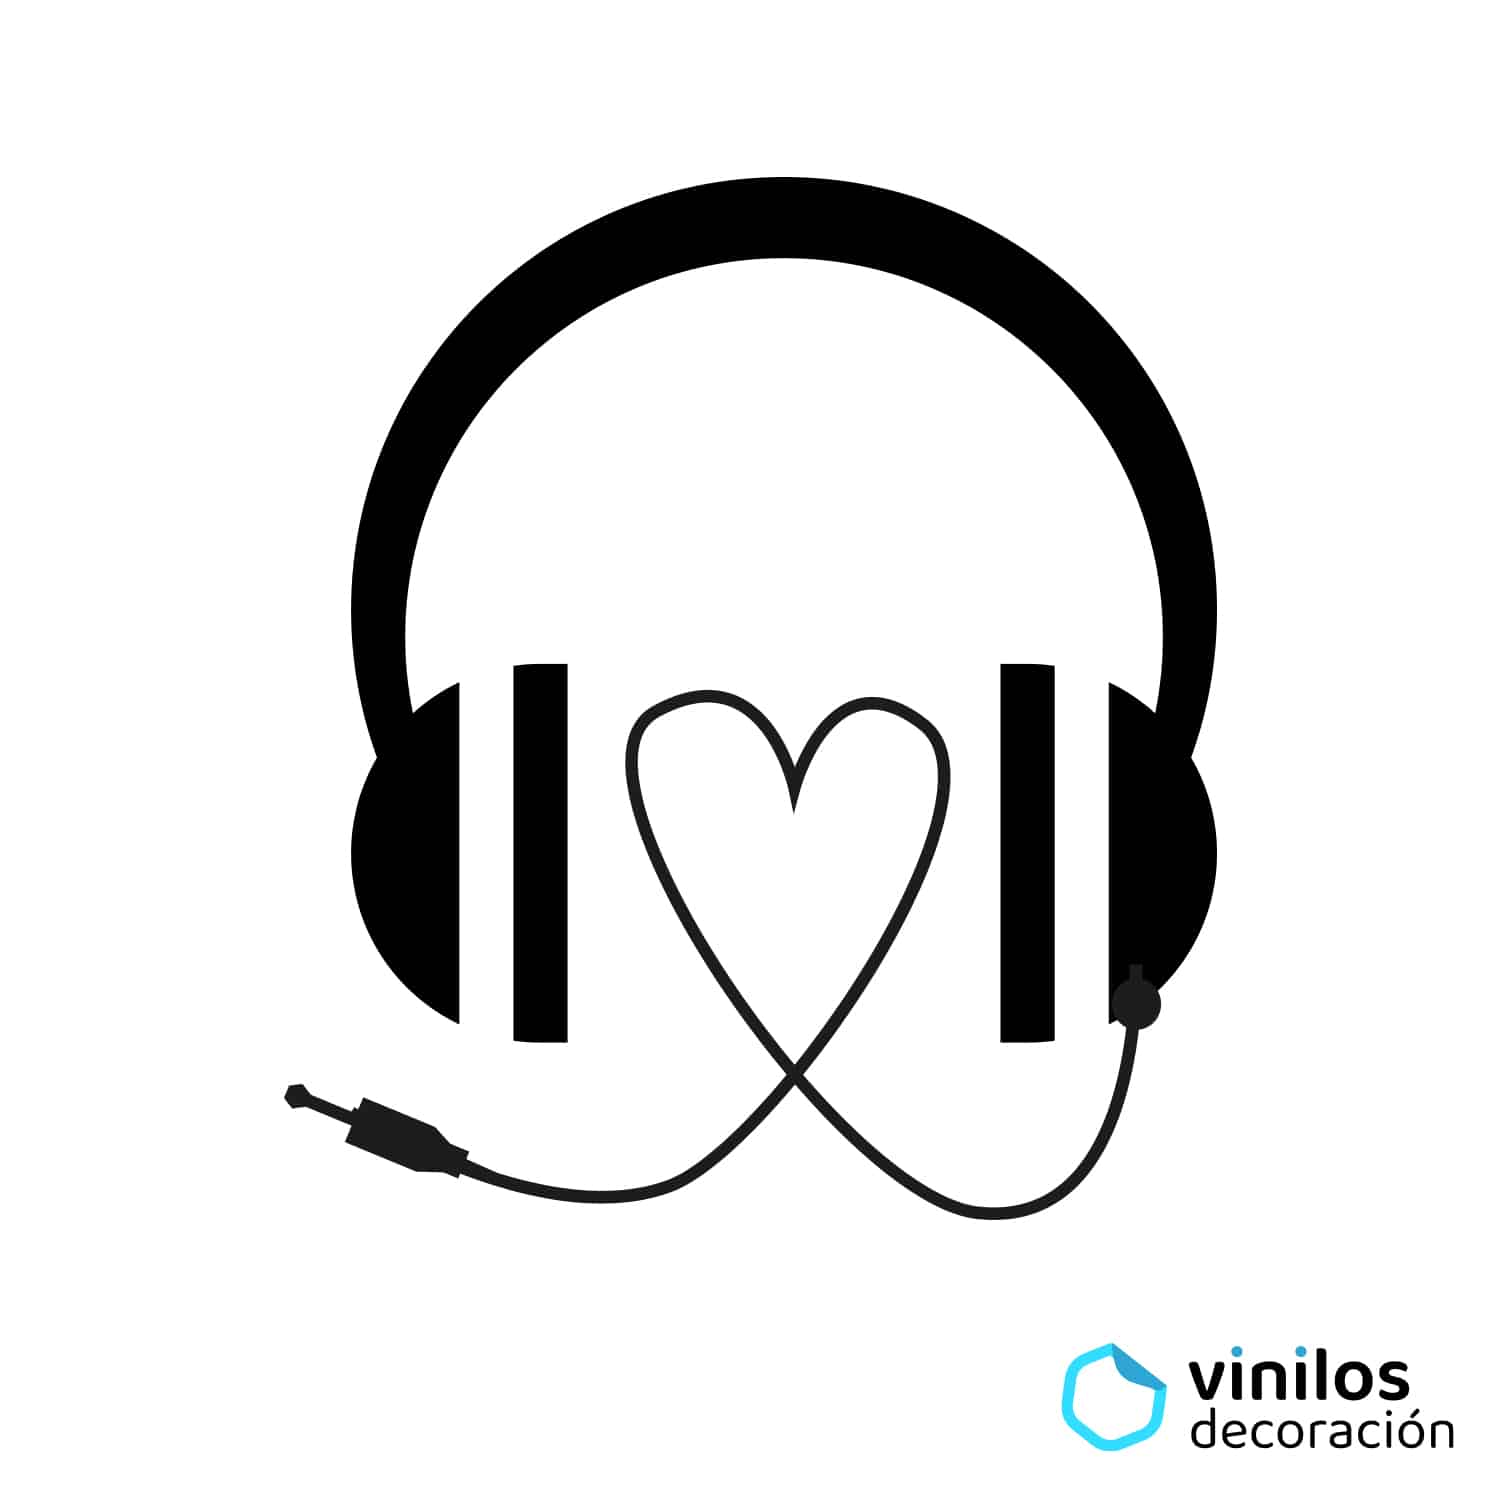 https://www.vinilosdecoracion.es/wp-content/uploads/2021/06/VDECO-MUSICA-000016-5.jpg